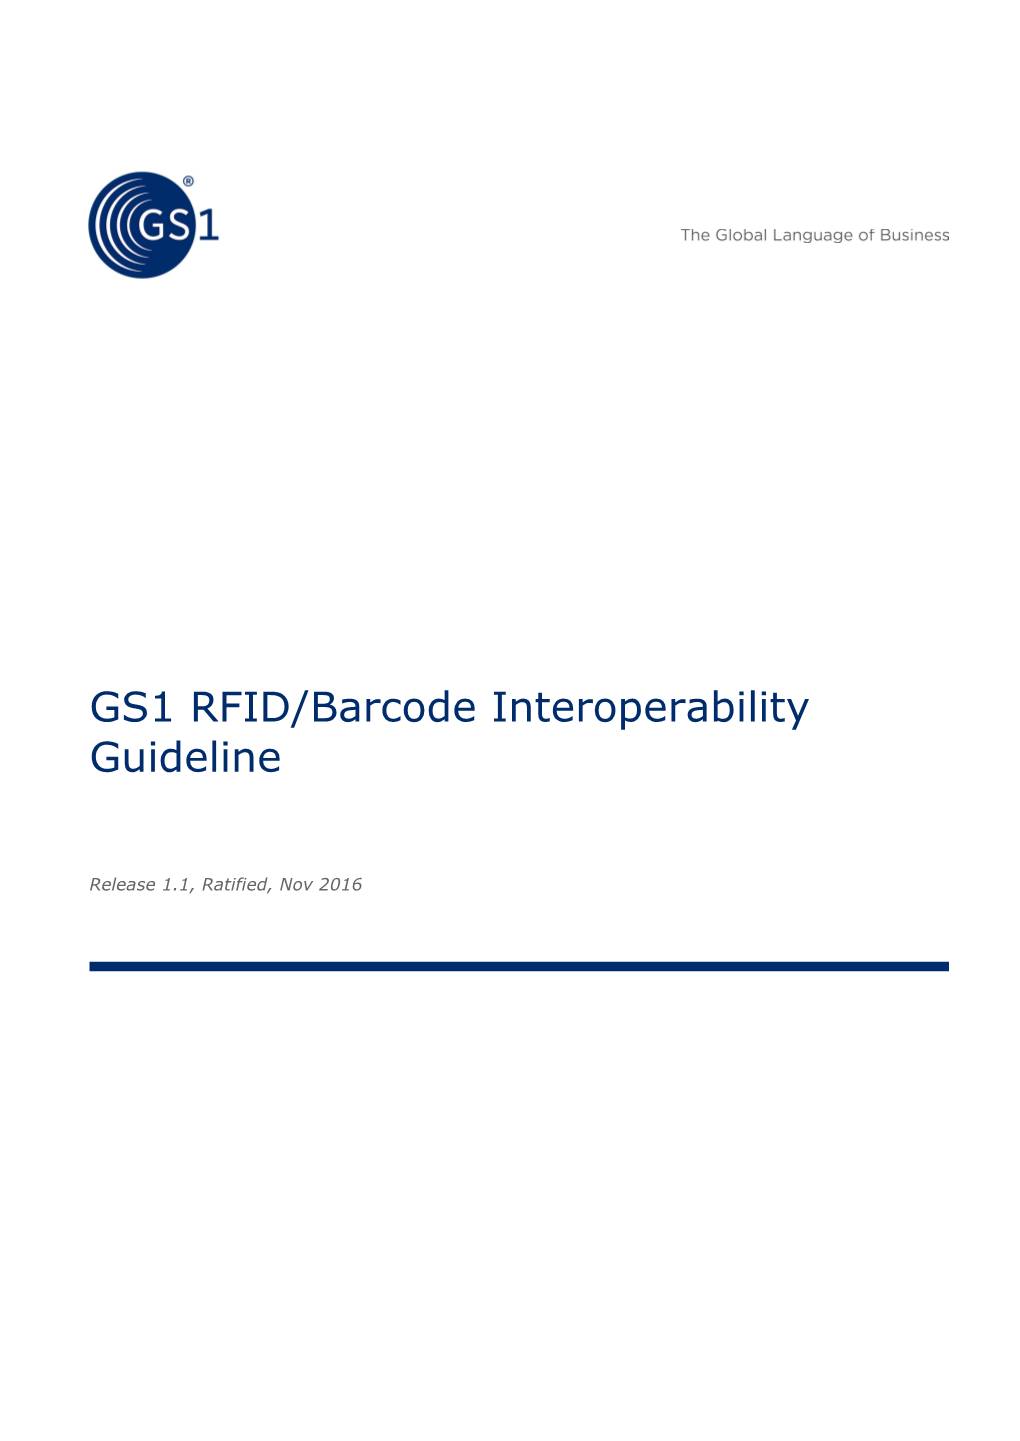 GS1 RFID/Barcode Interoperability Guideline